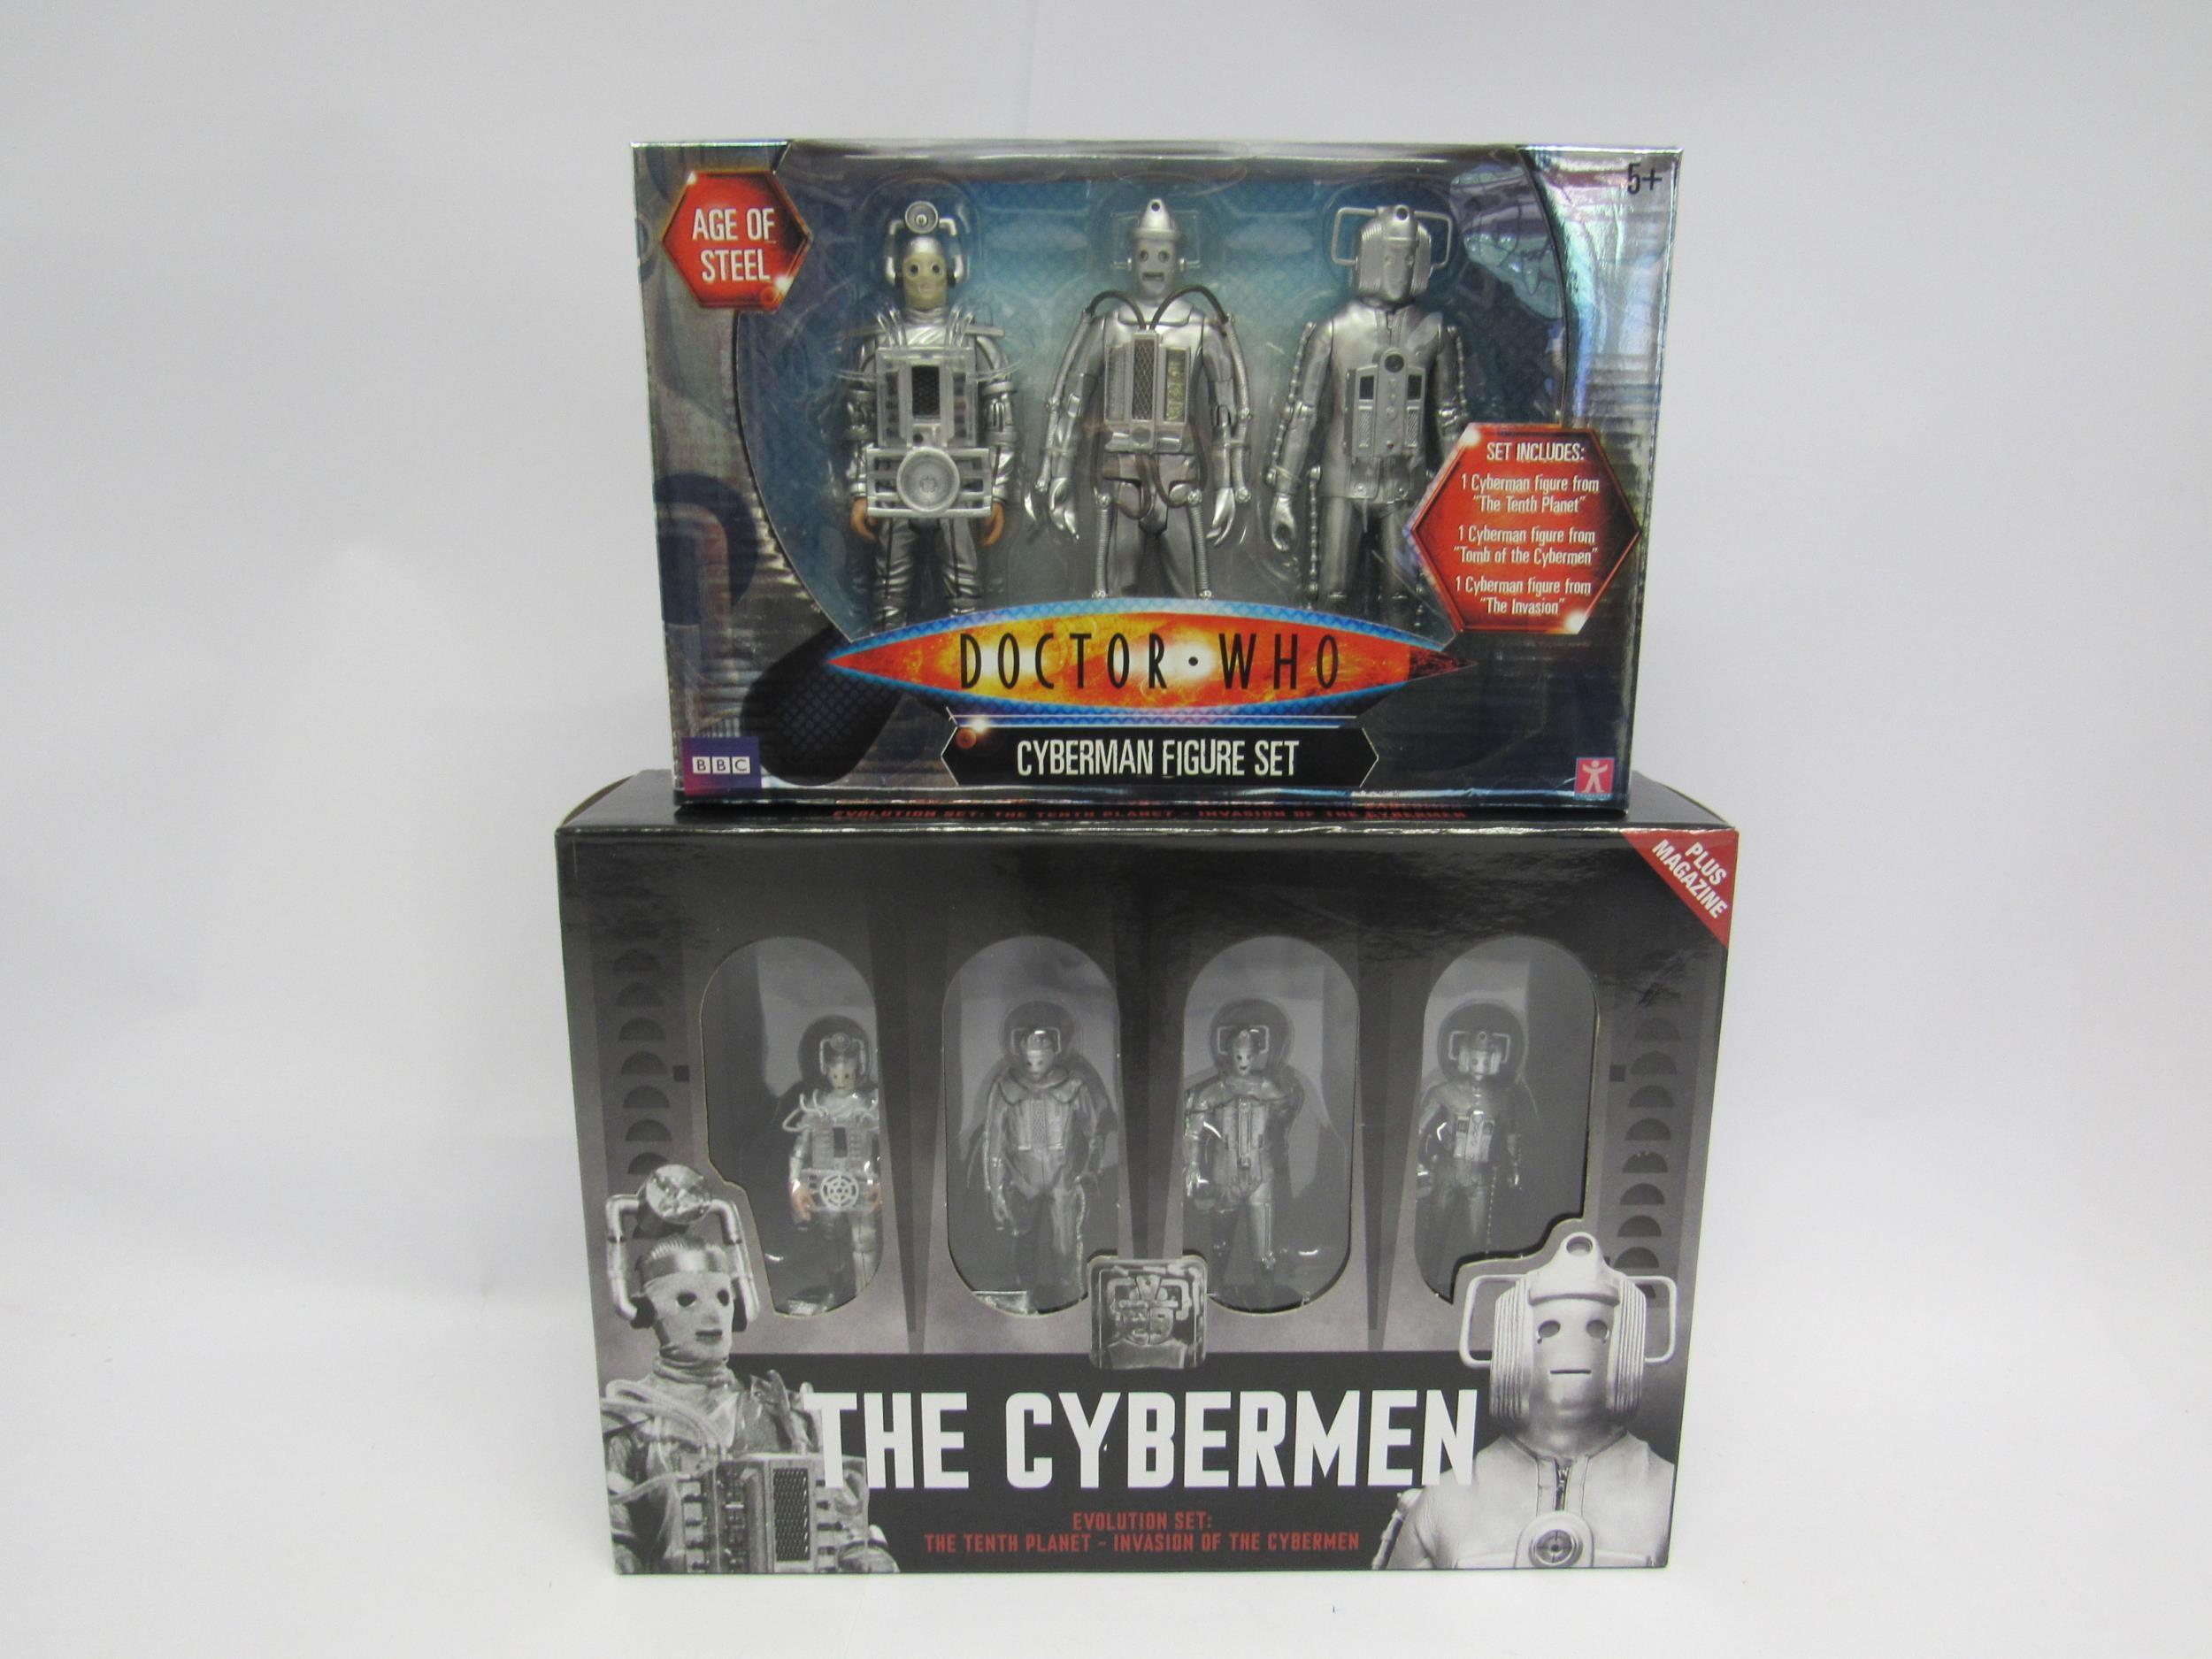 A BBC Doctor Who Age Of Steel Cyberman Figure Set and Eaglemoss The Cyberman Evolution Set (2,